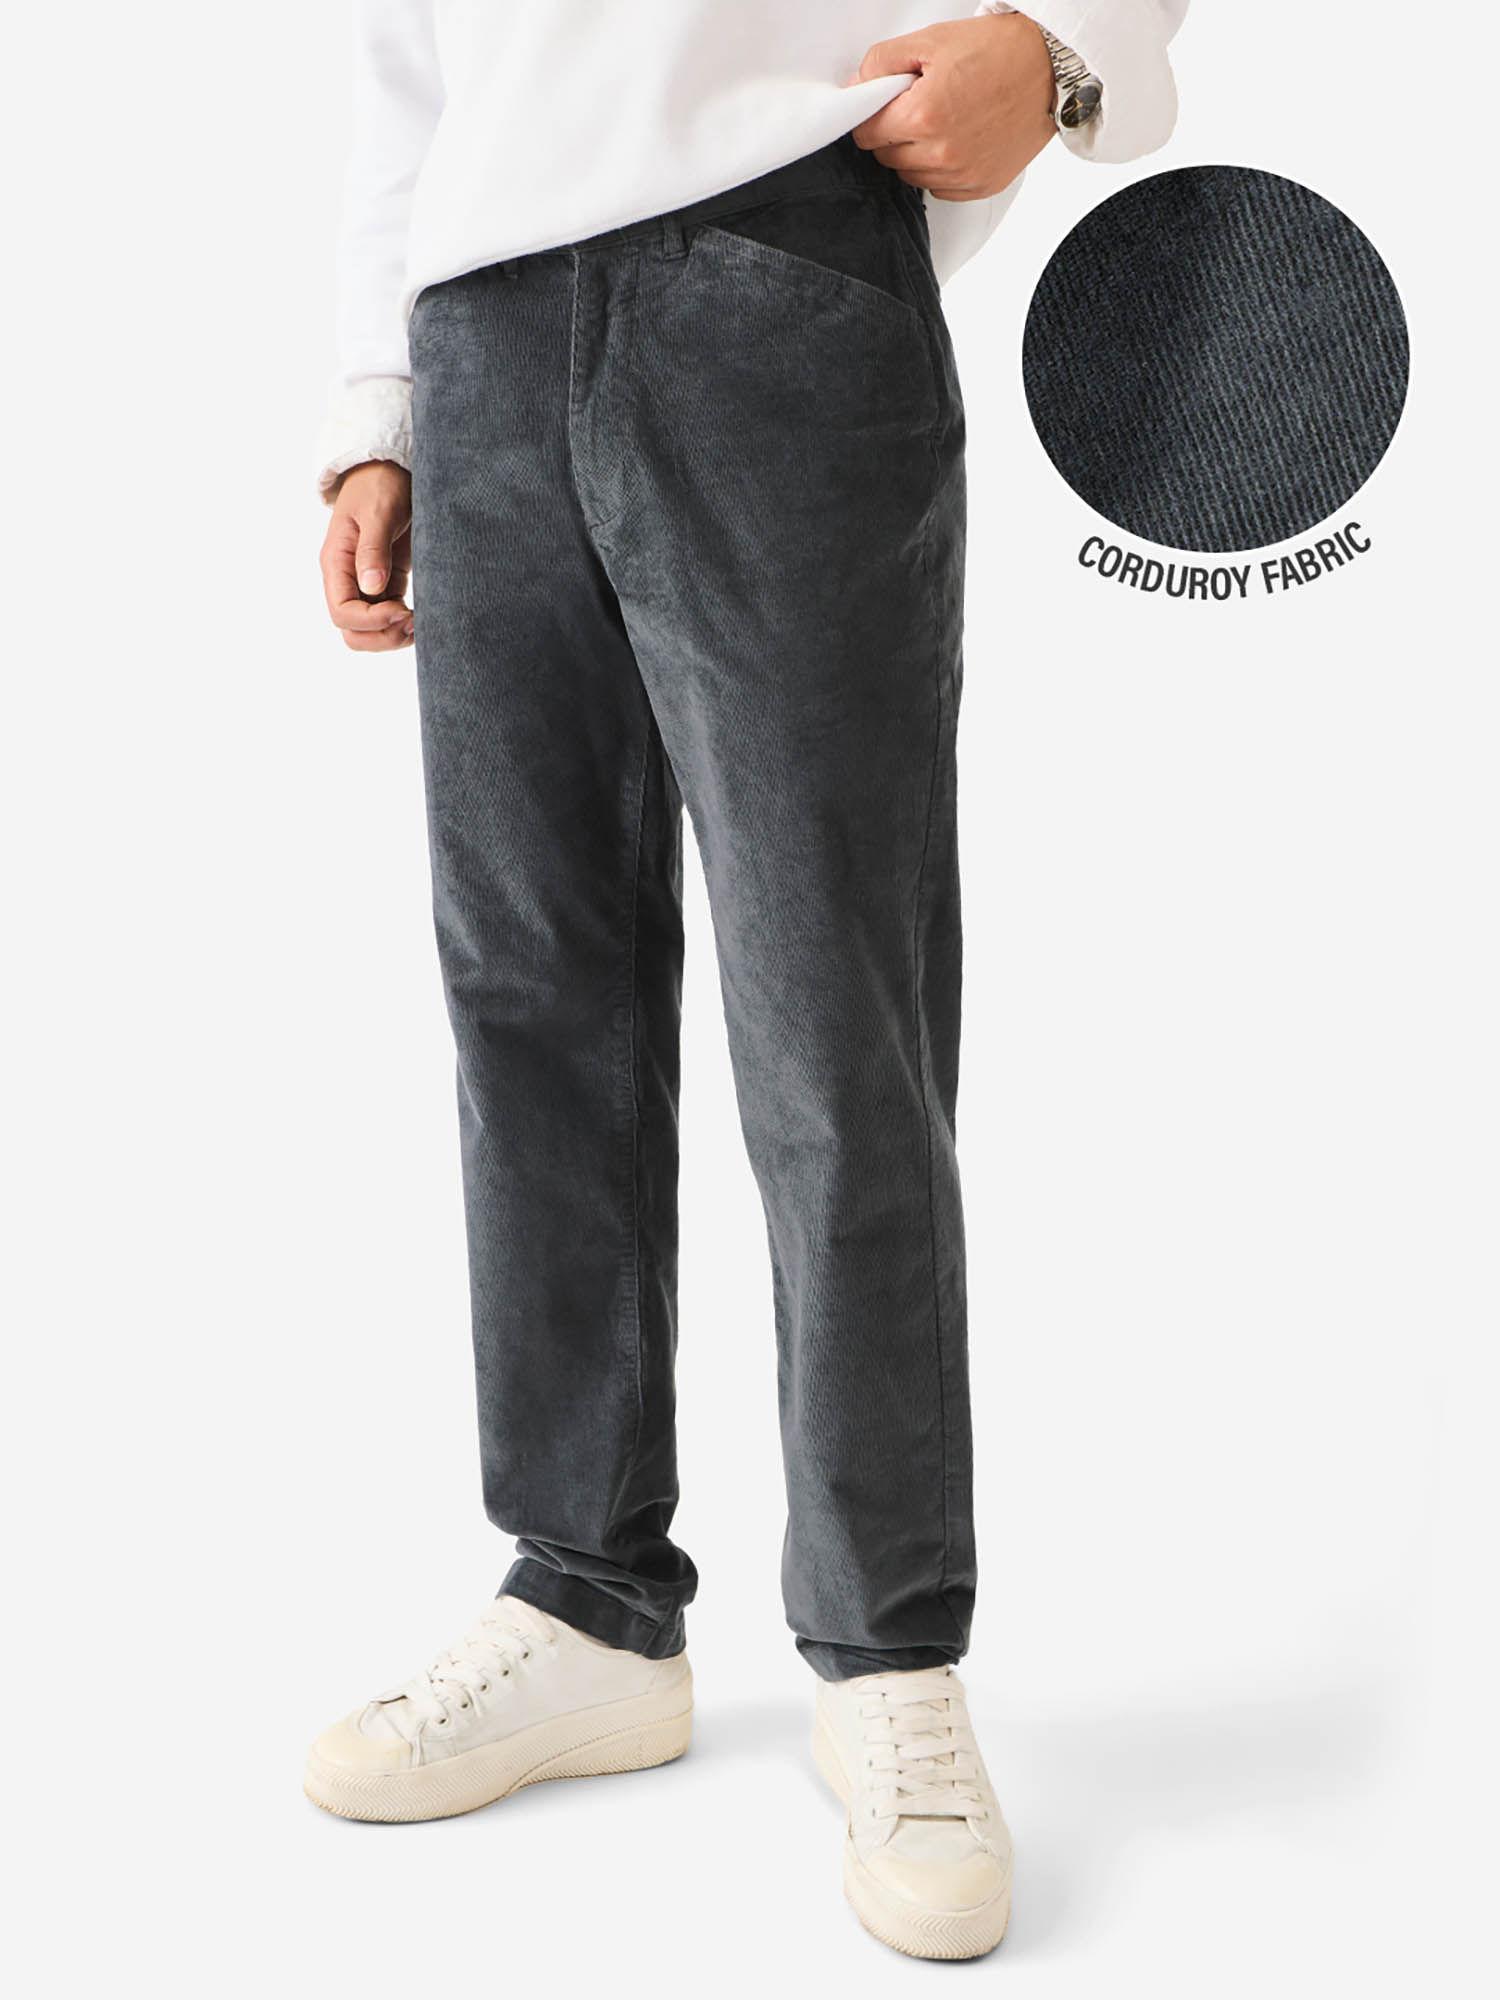 original corduroy pants: charcoal grey men pants